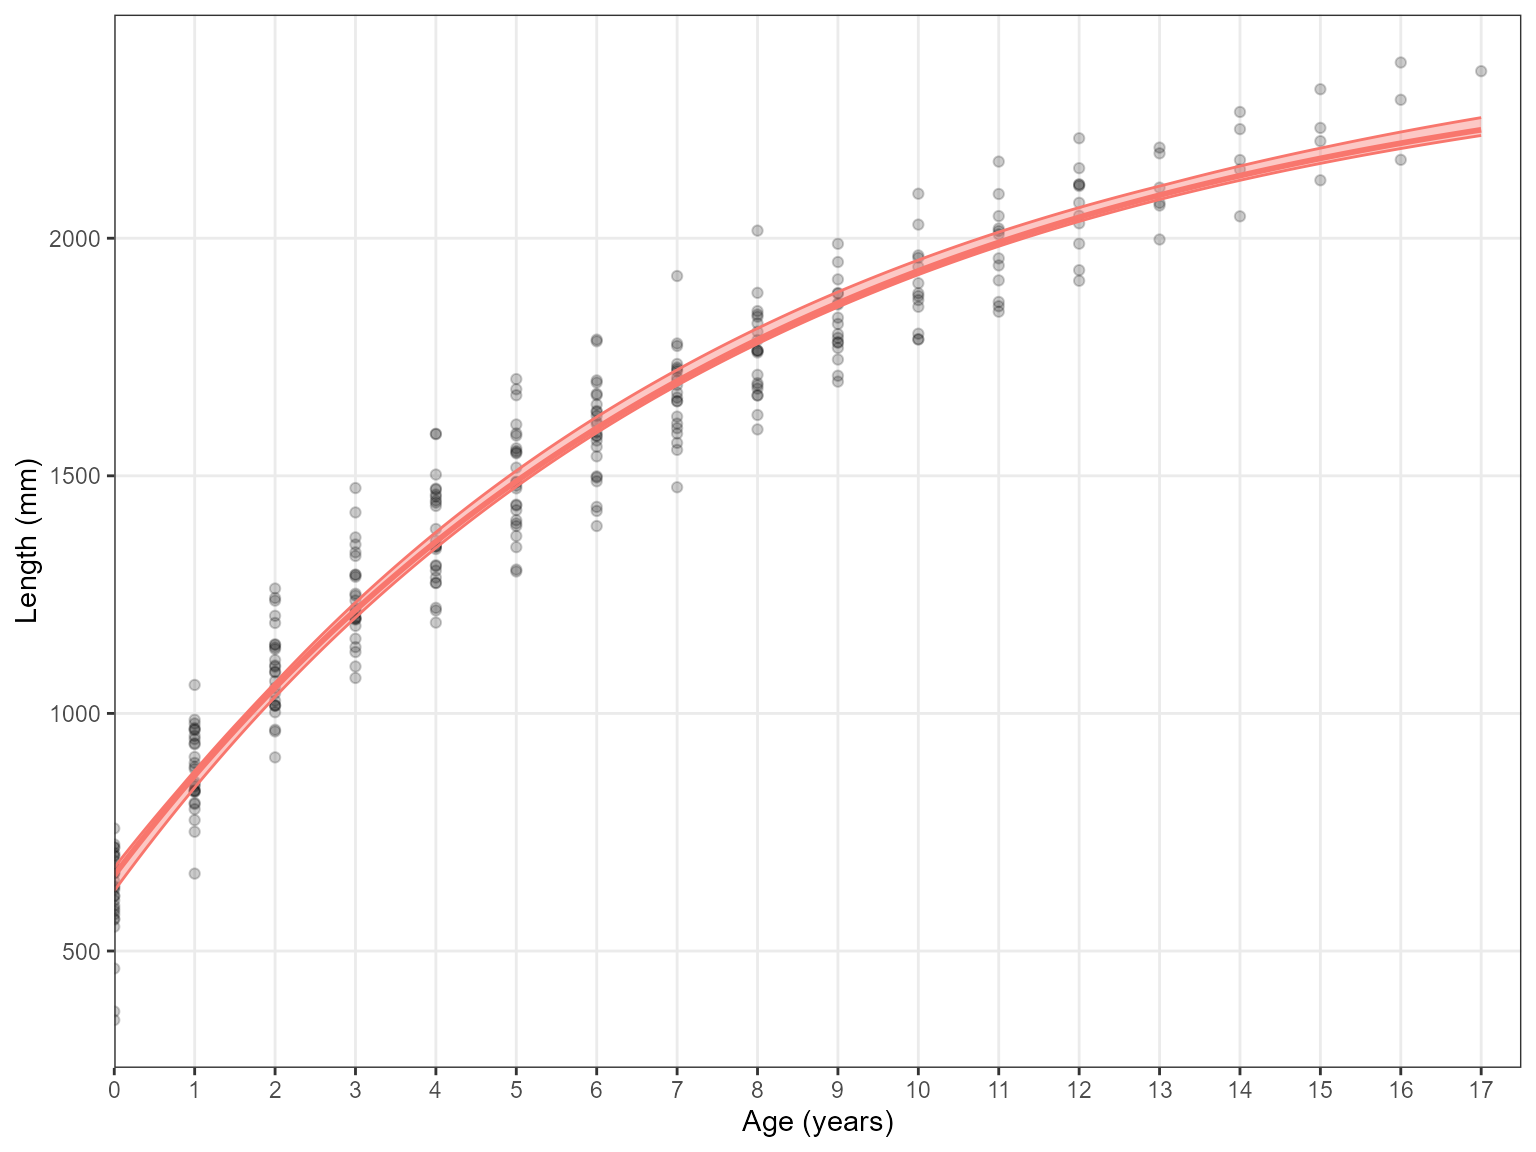 The von Bertalanffy growth parameters values of C. regium reported from